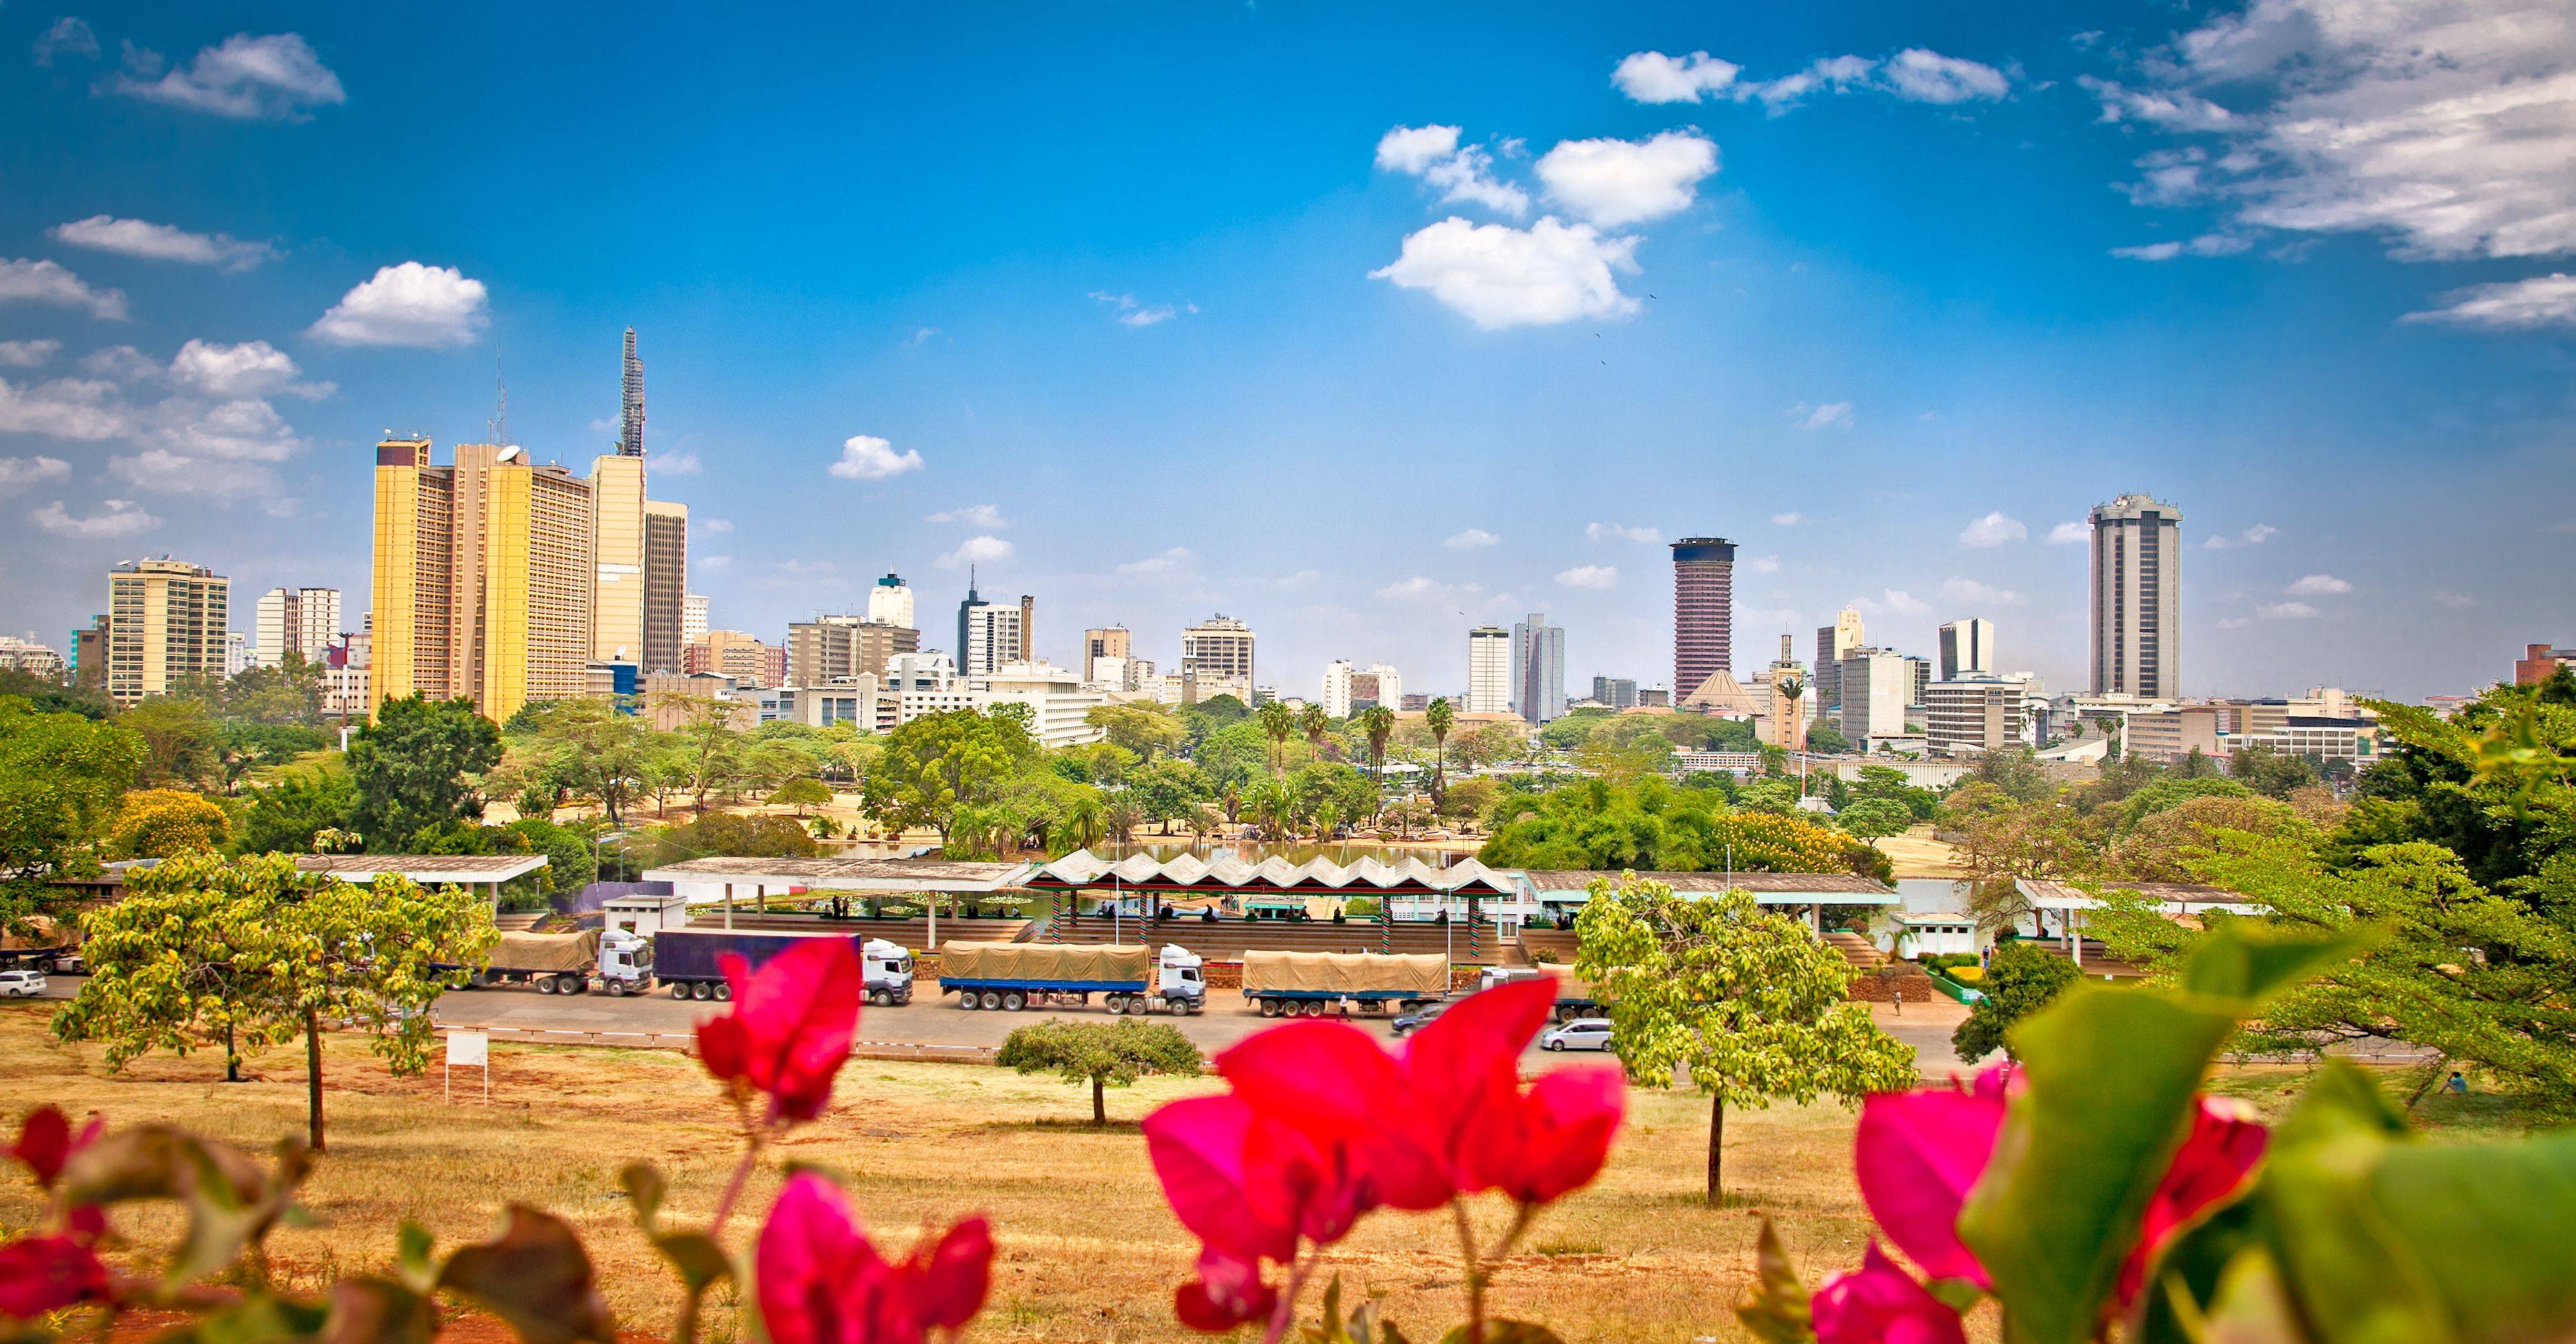 ¡Bienvenido a Nairobi!